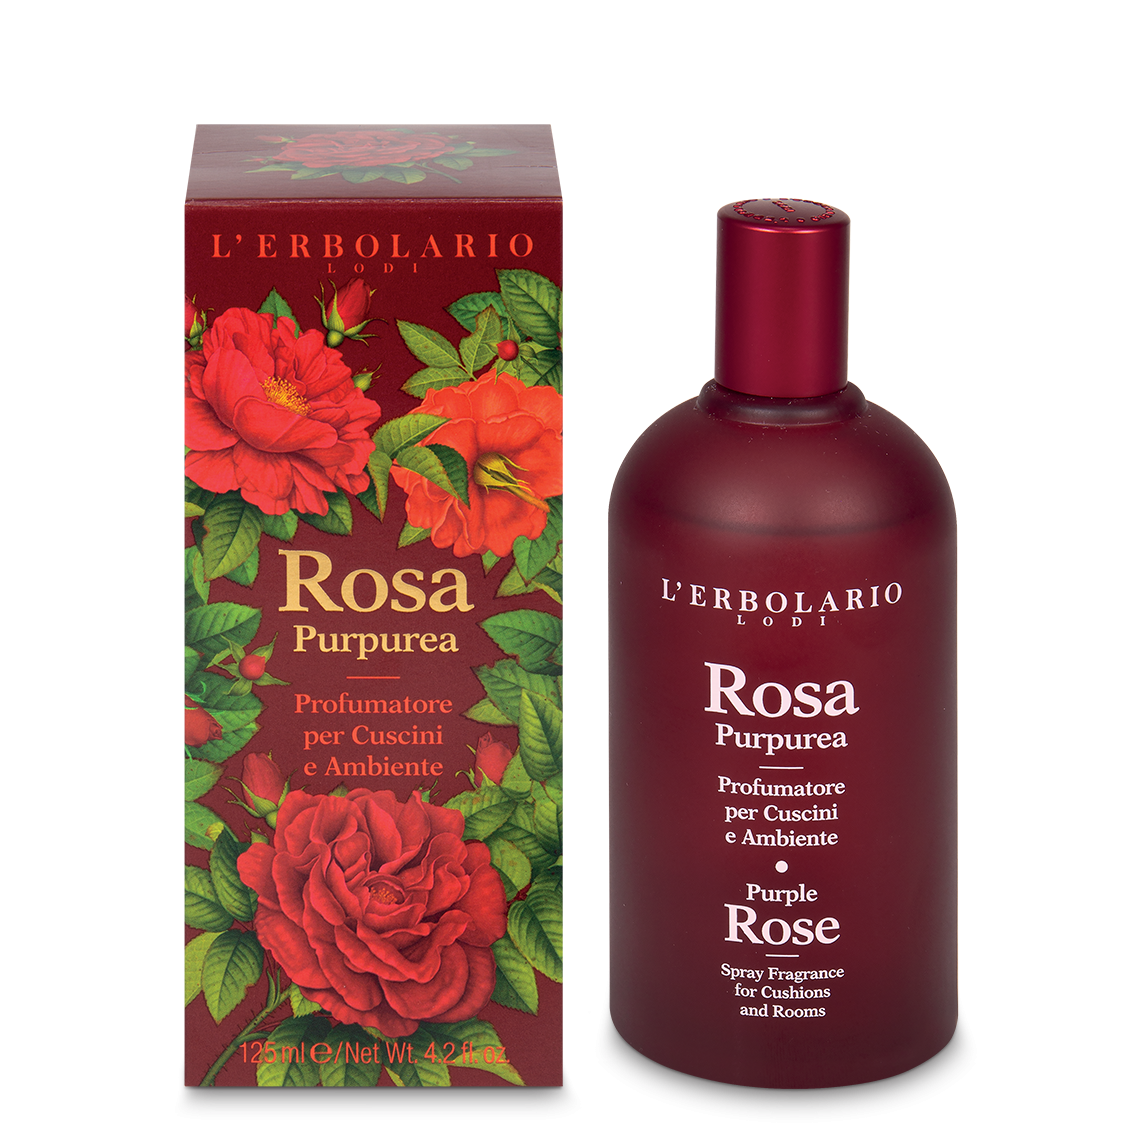 Rosa Purpurea - Profumatore per Cuscini e Ambiente - 125 ml